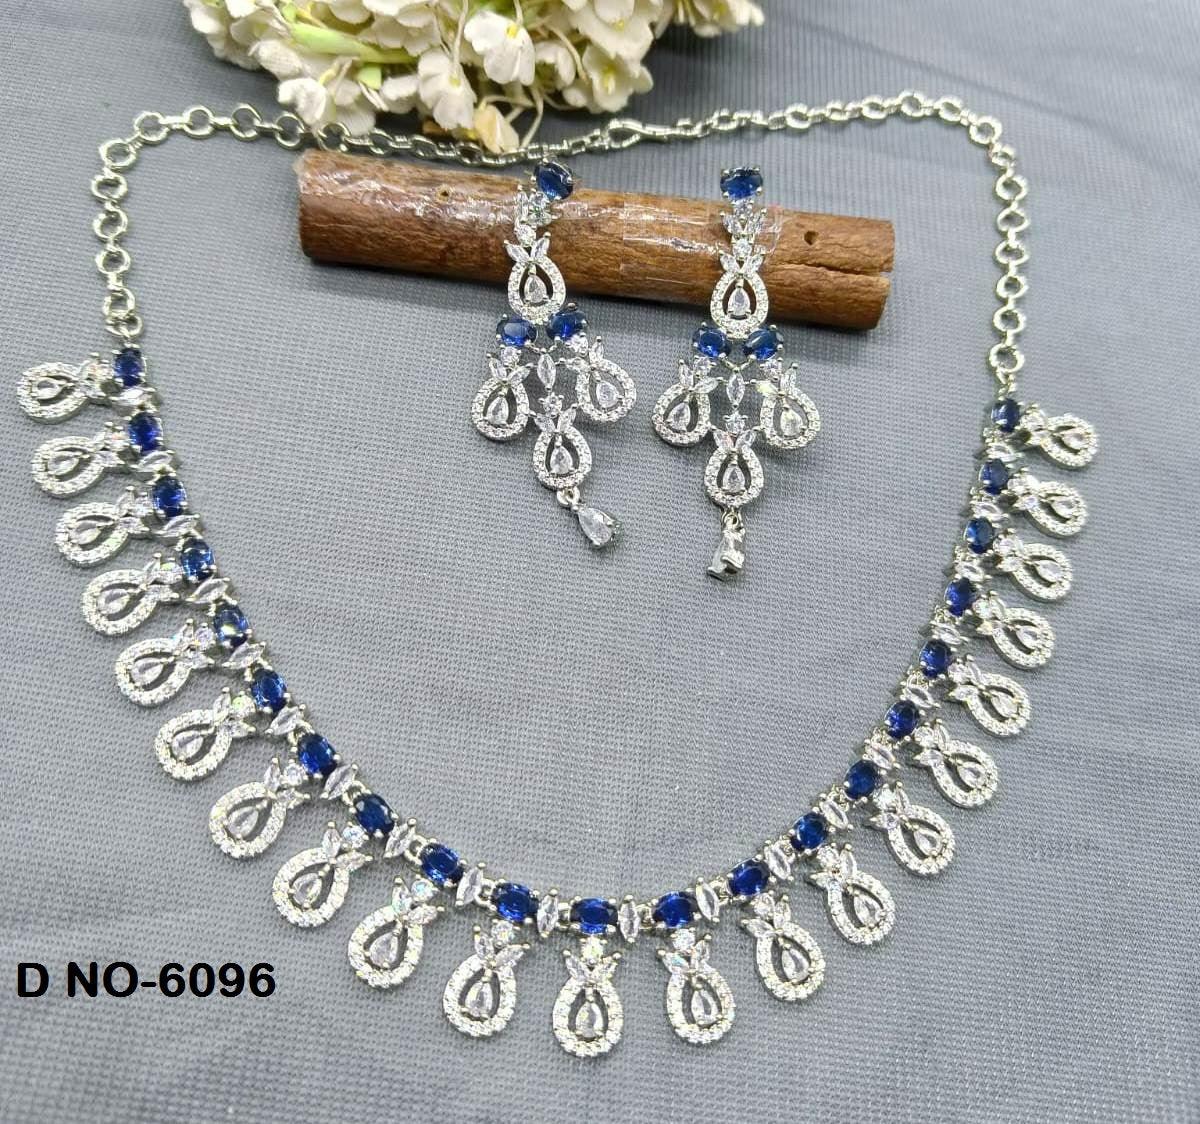 Diamond Necklace Rodium Sku-6096 C3 - rchiecreation